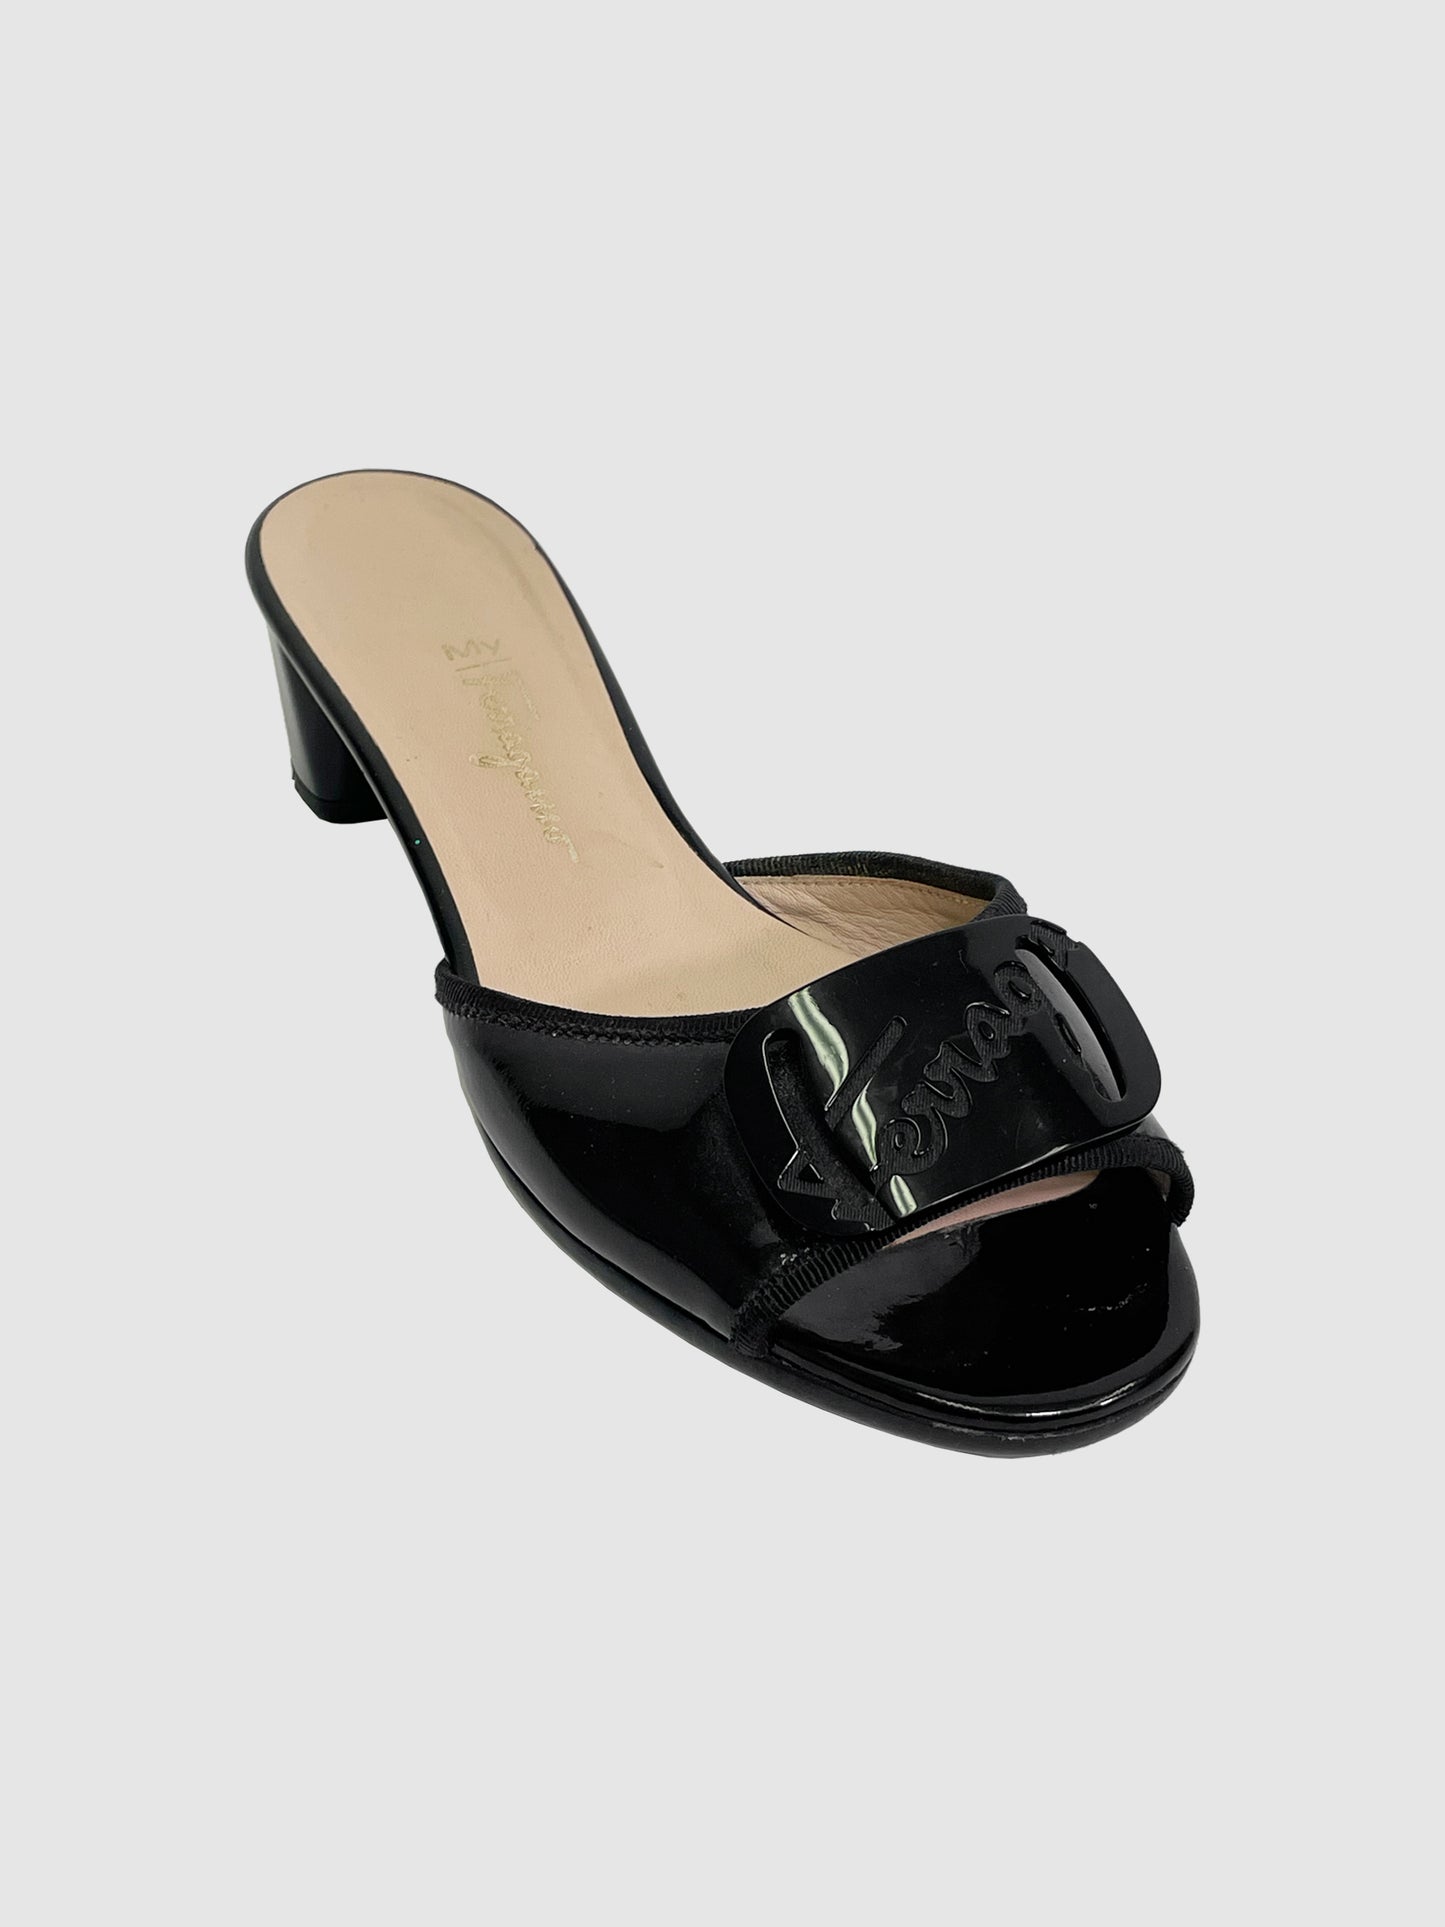 Salvatore Ferragamo Patent Slip On Heels - Size 7.5